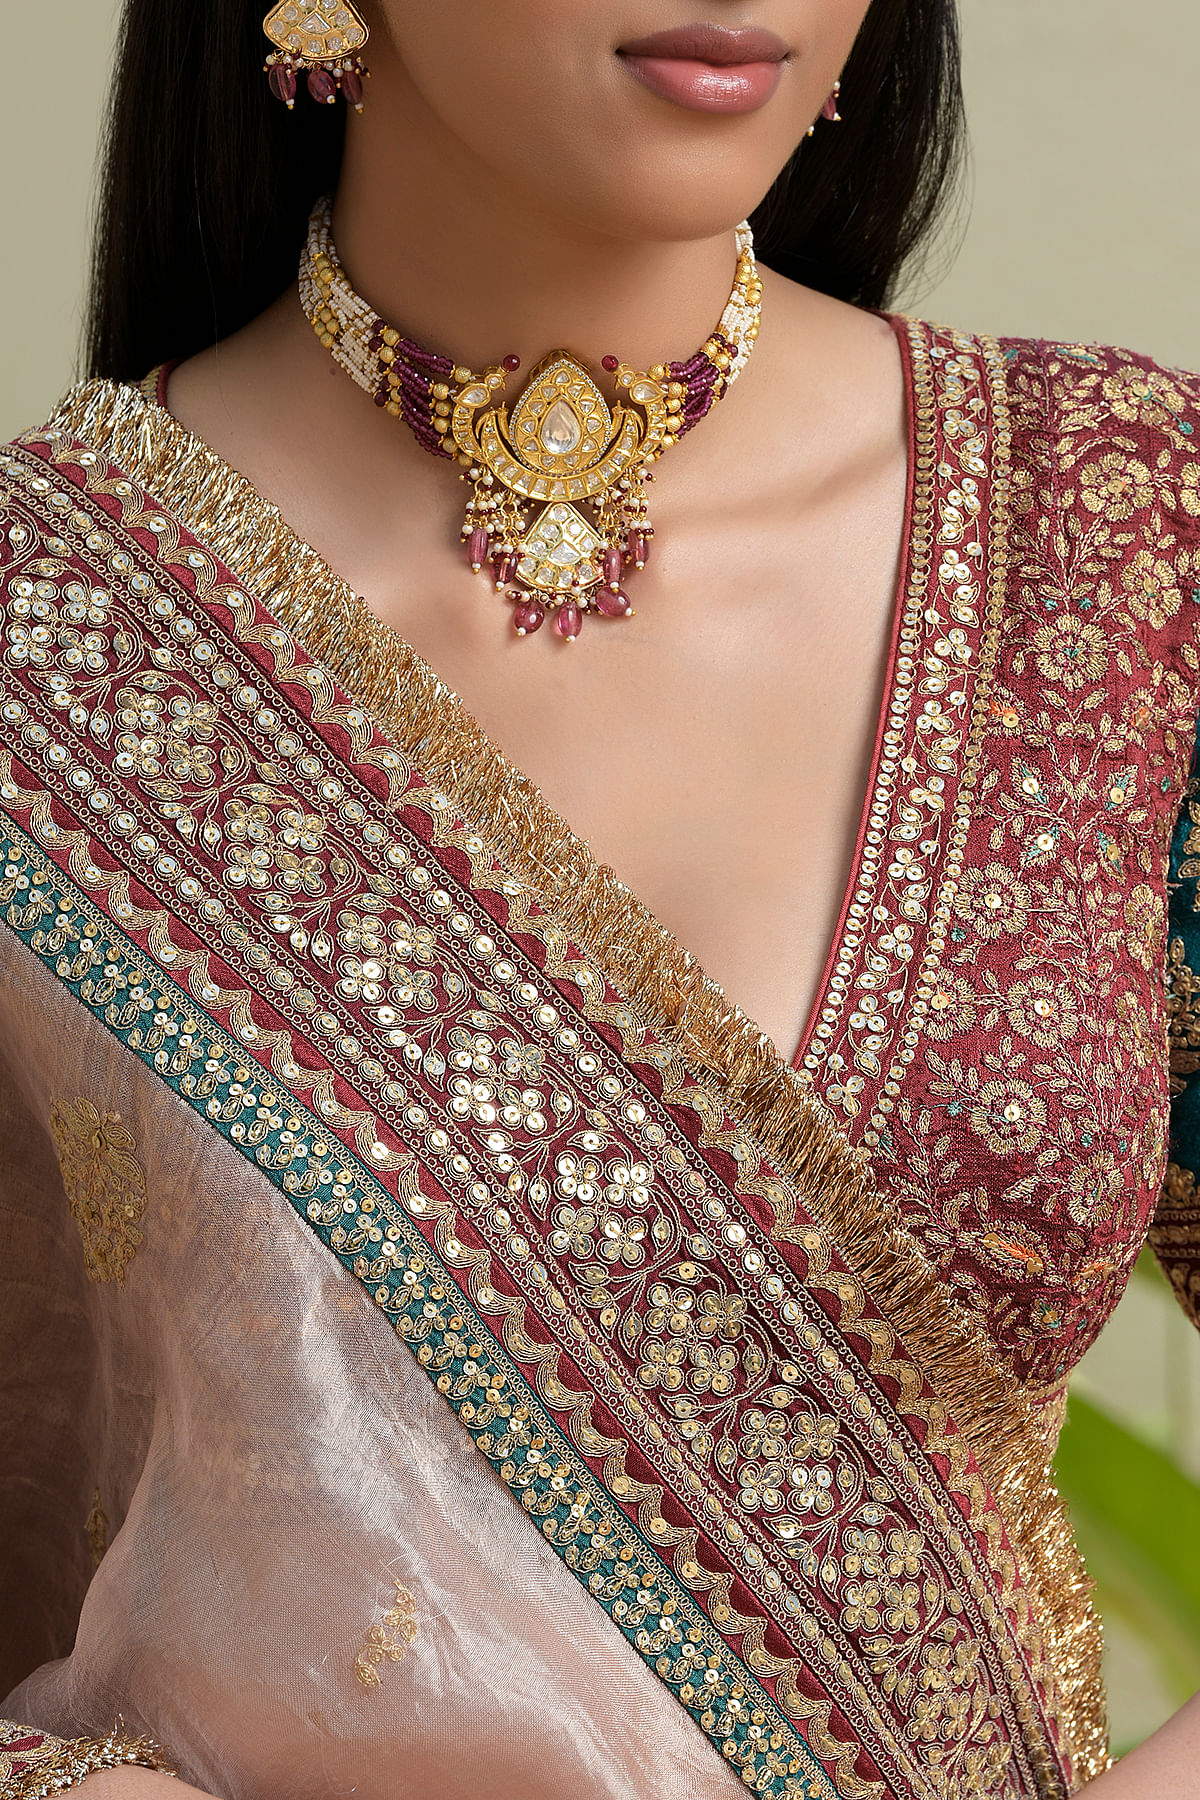 The Most Gorgeous South Indian Lehenga Saree Designs We Spotted! | Lehenga  saree design, Saree designs, Indian lehenga